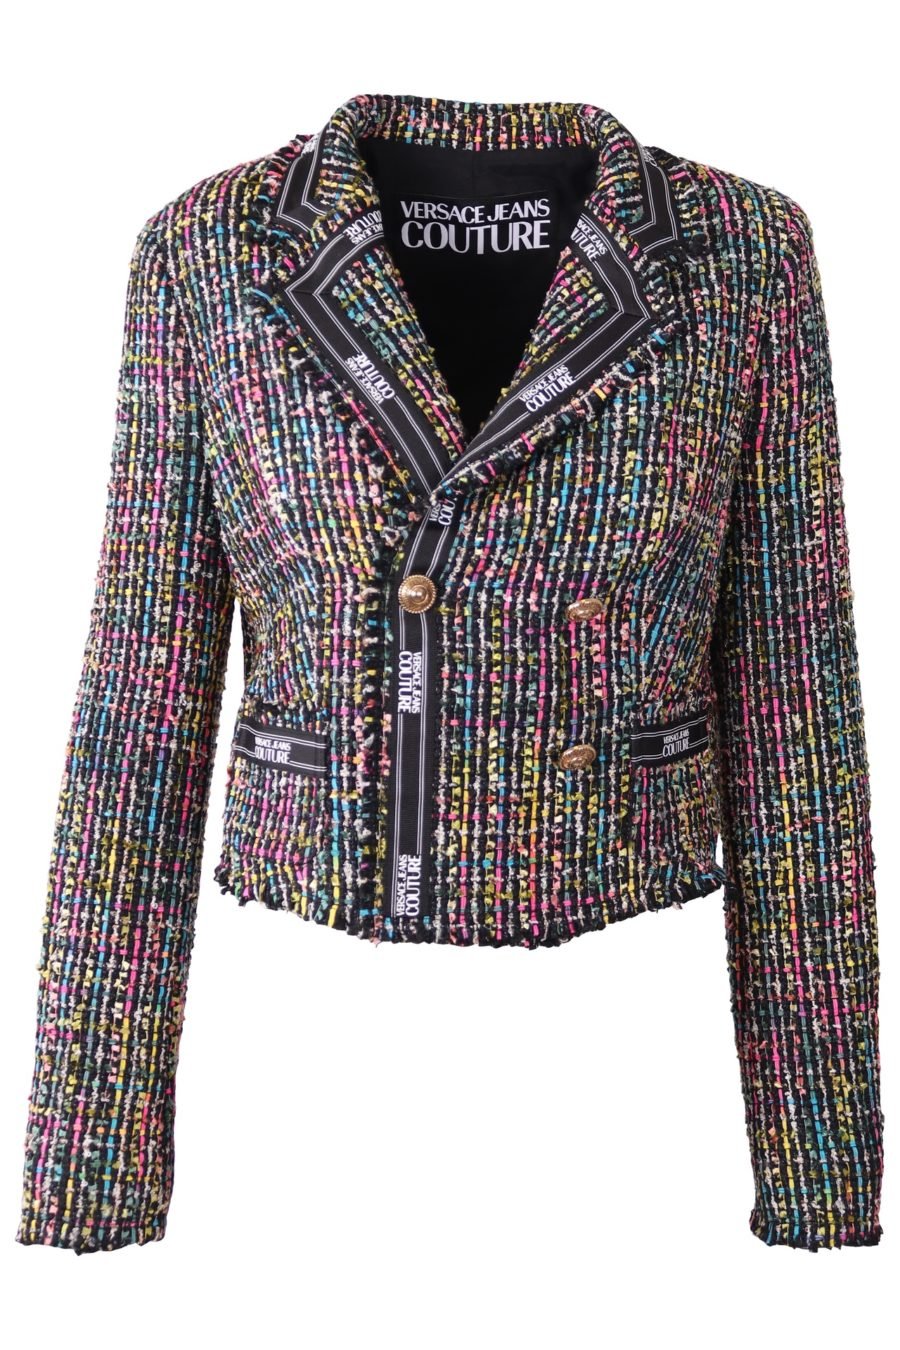 Chaqueta Versace Jeans Couture multicolor de tweed - 89aadc1f83c2f5598b18389b541bf994c6235b21